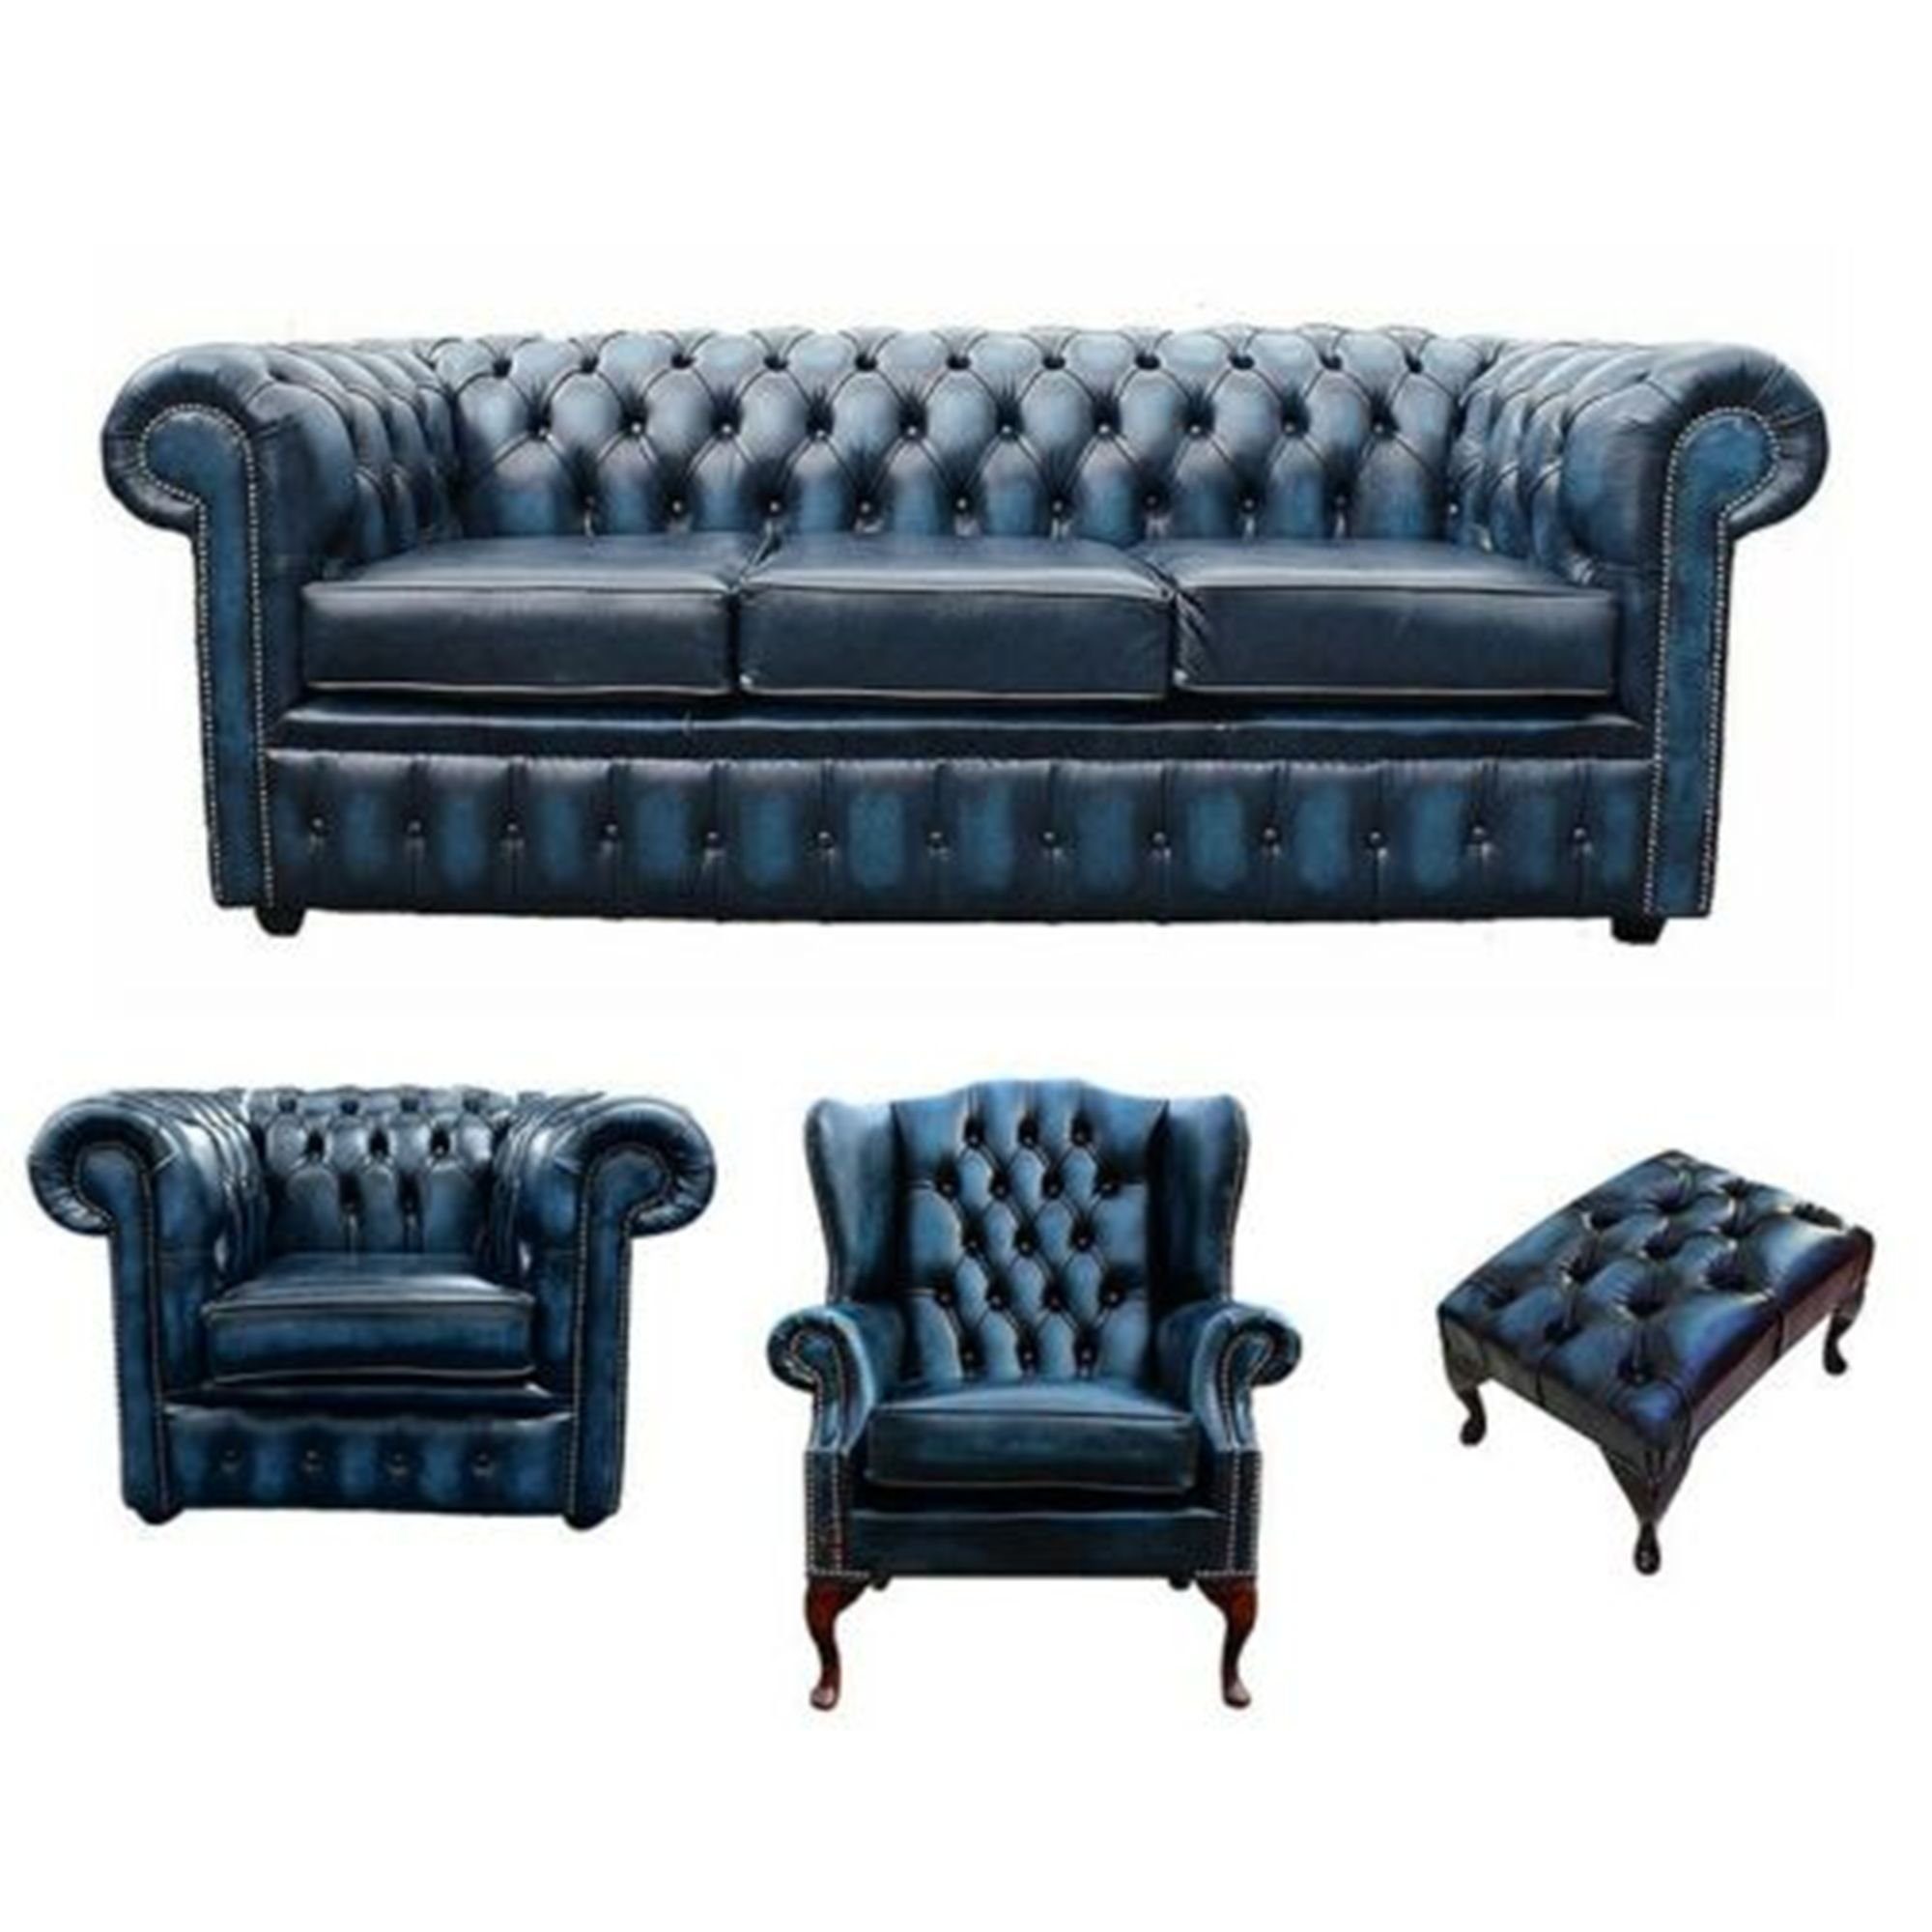 JVmoebel Sofa Luxus große blaue Couchgarnitur 3+1 Sitzer + Ohrensessel + Hocker, Made in Europe